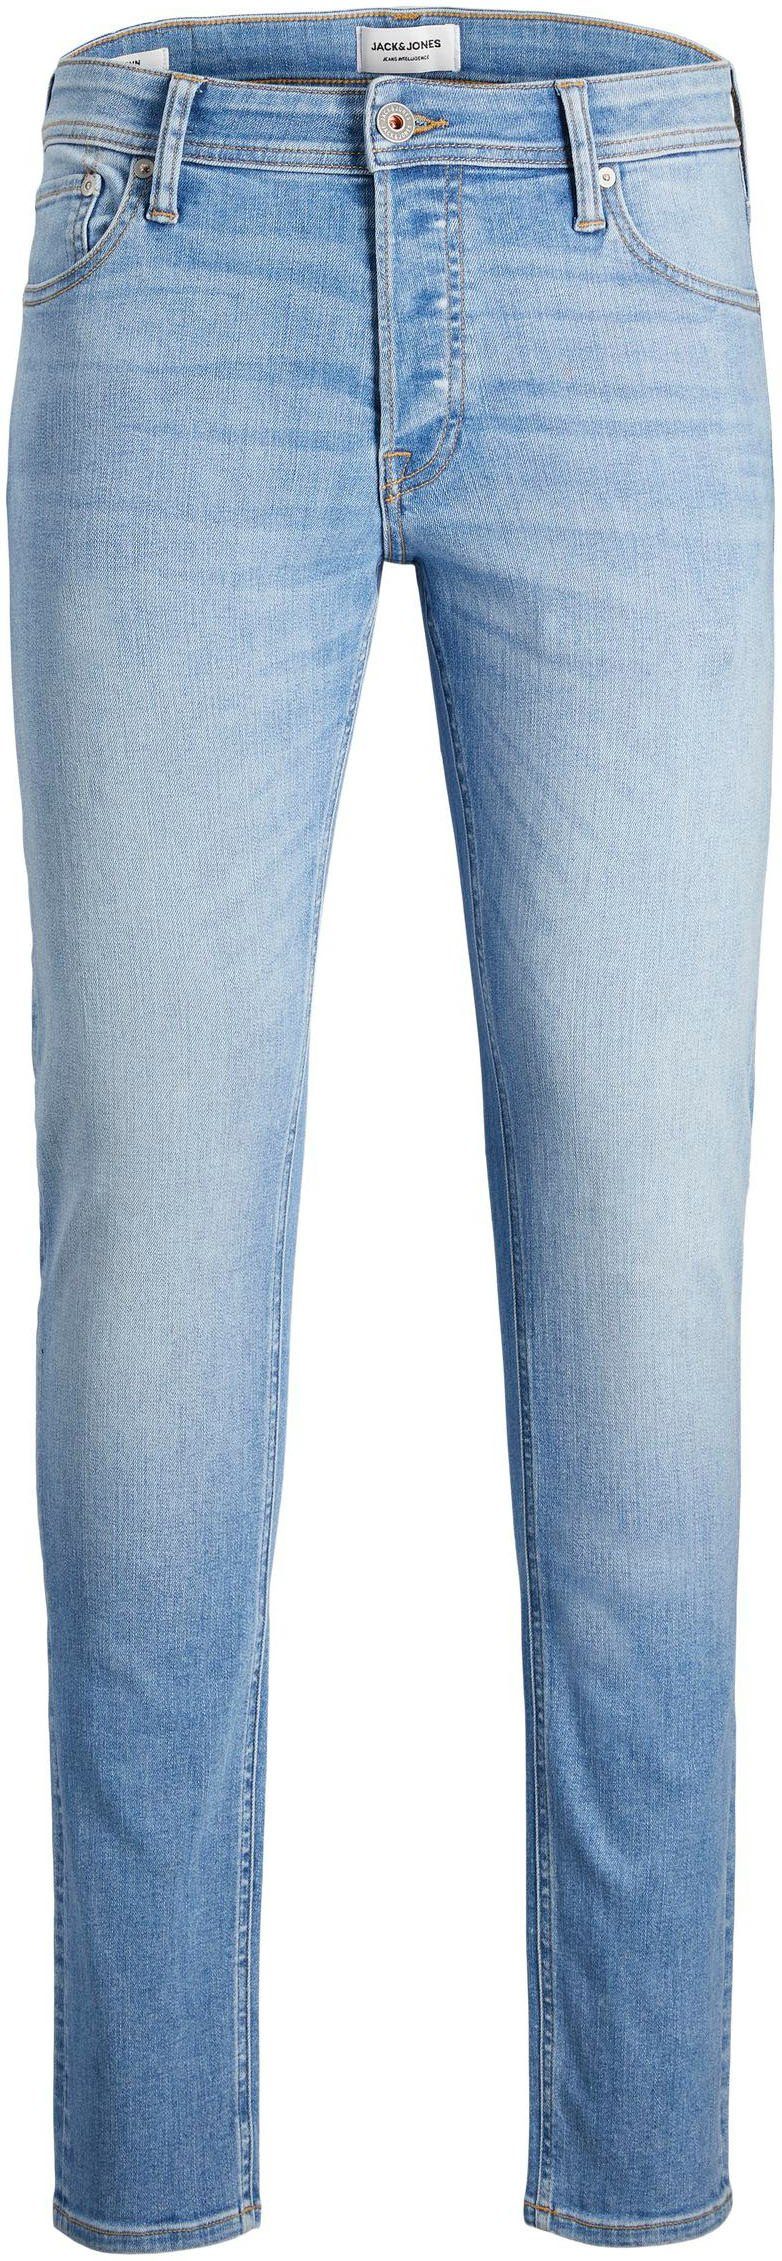 Jack & MIKE Jones Comfort-fit-Jeans light-blue-denim